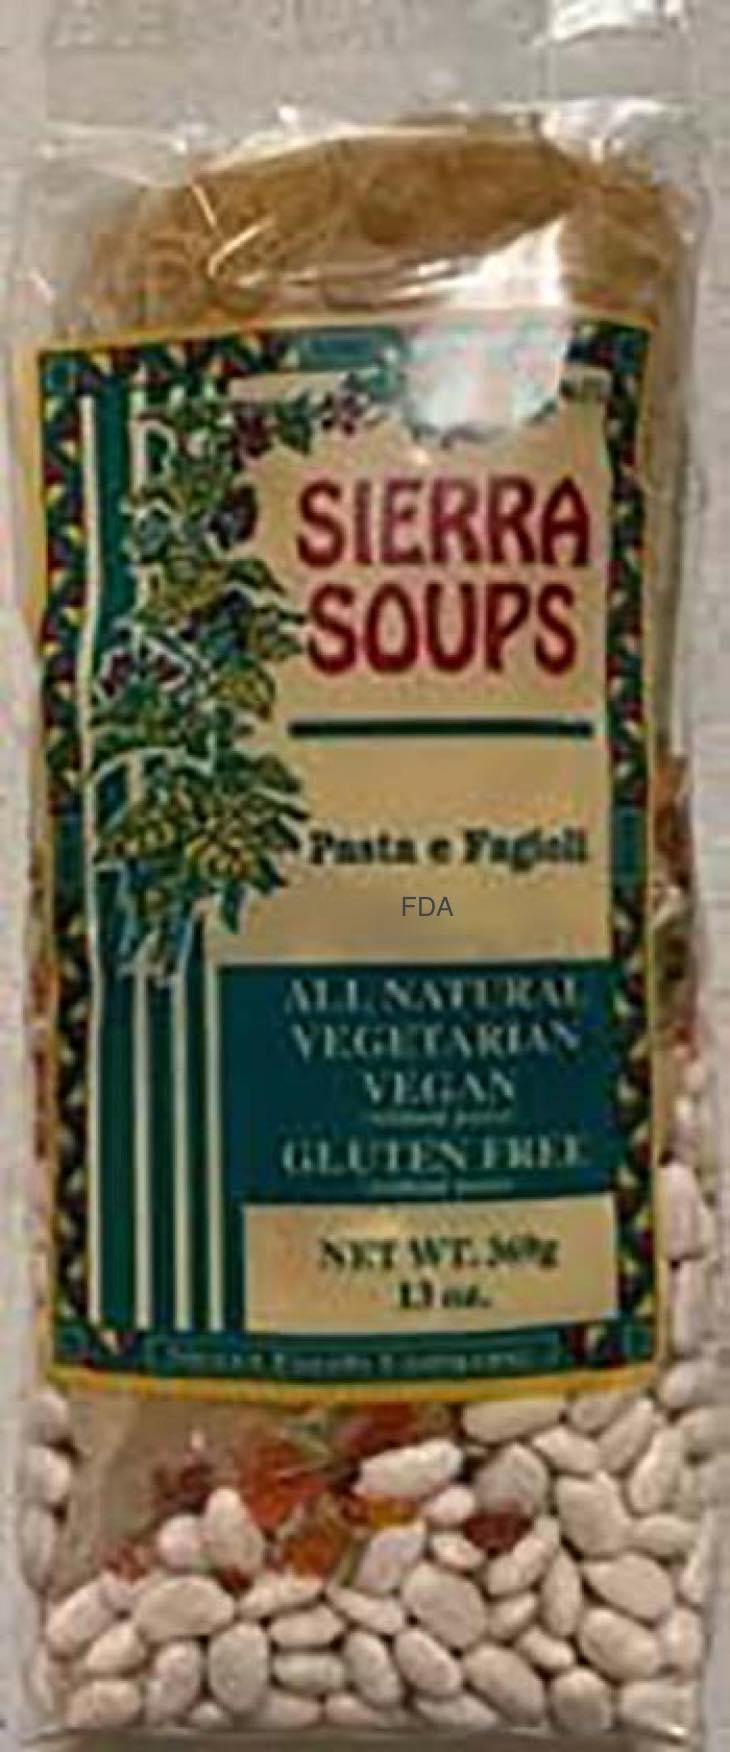 Sierra Soups Recalls Pasta e Fagioli For Undeclared Gluten